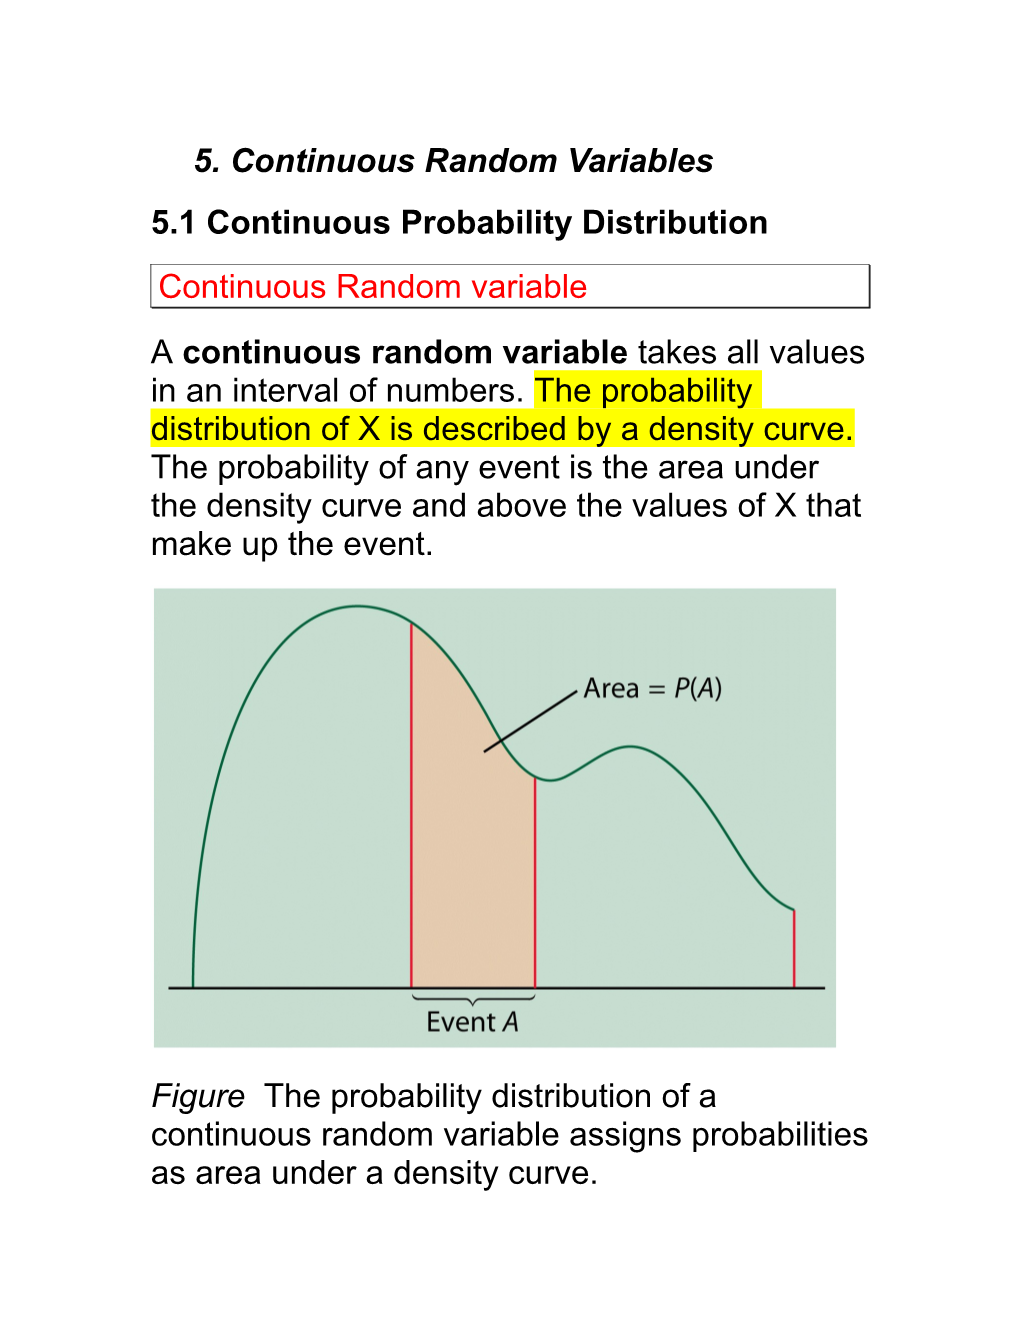 5. Continuous Random Variables